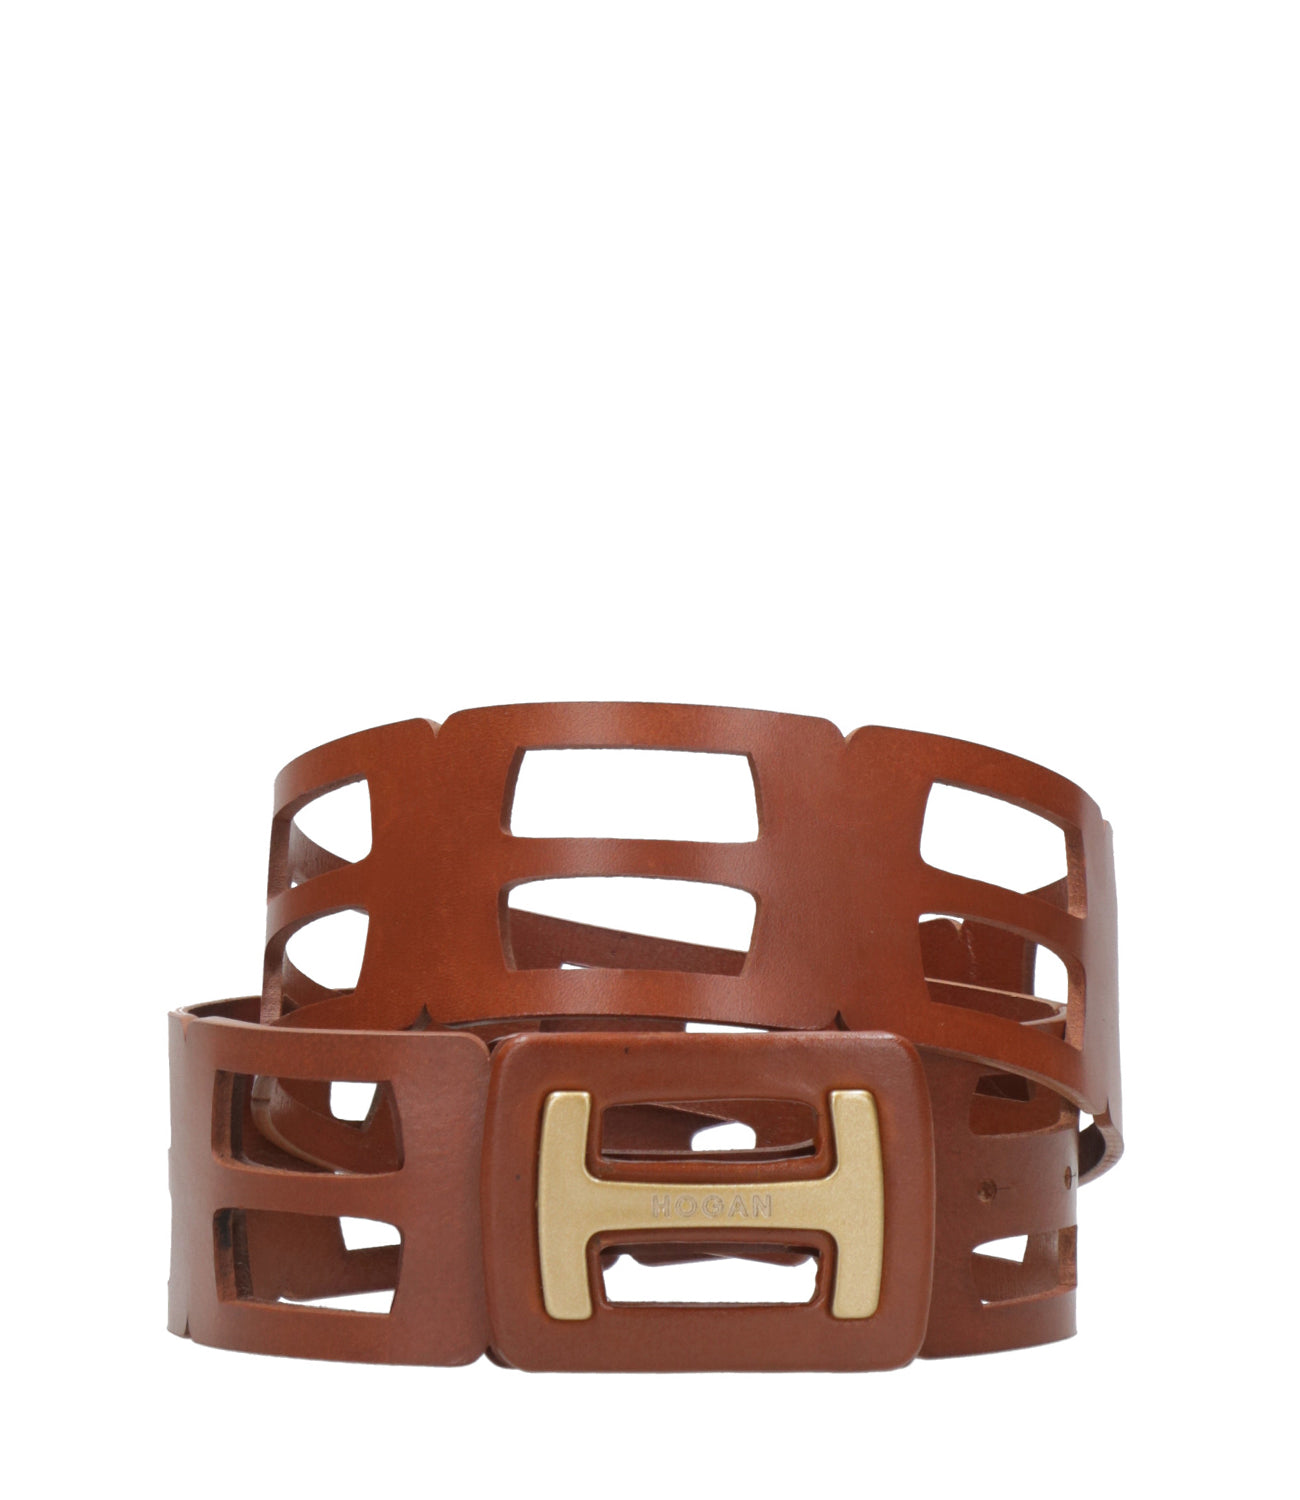 Hogan | Leather Belt